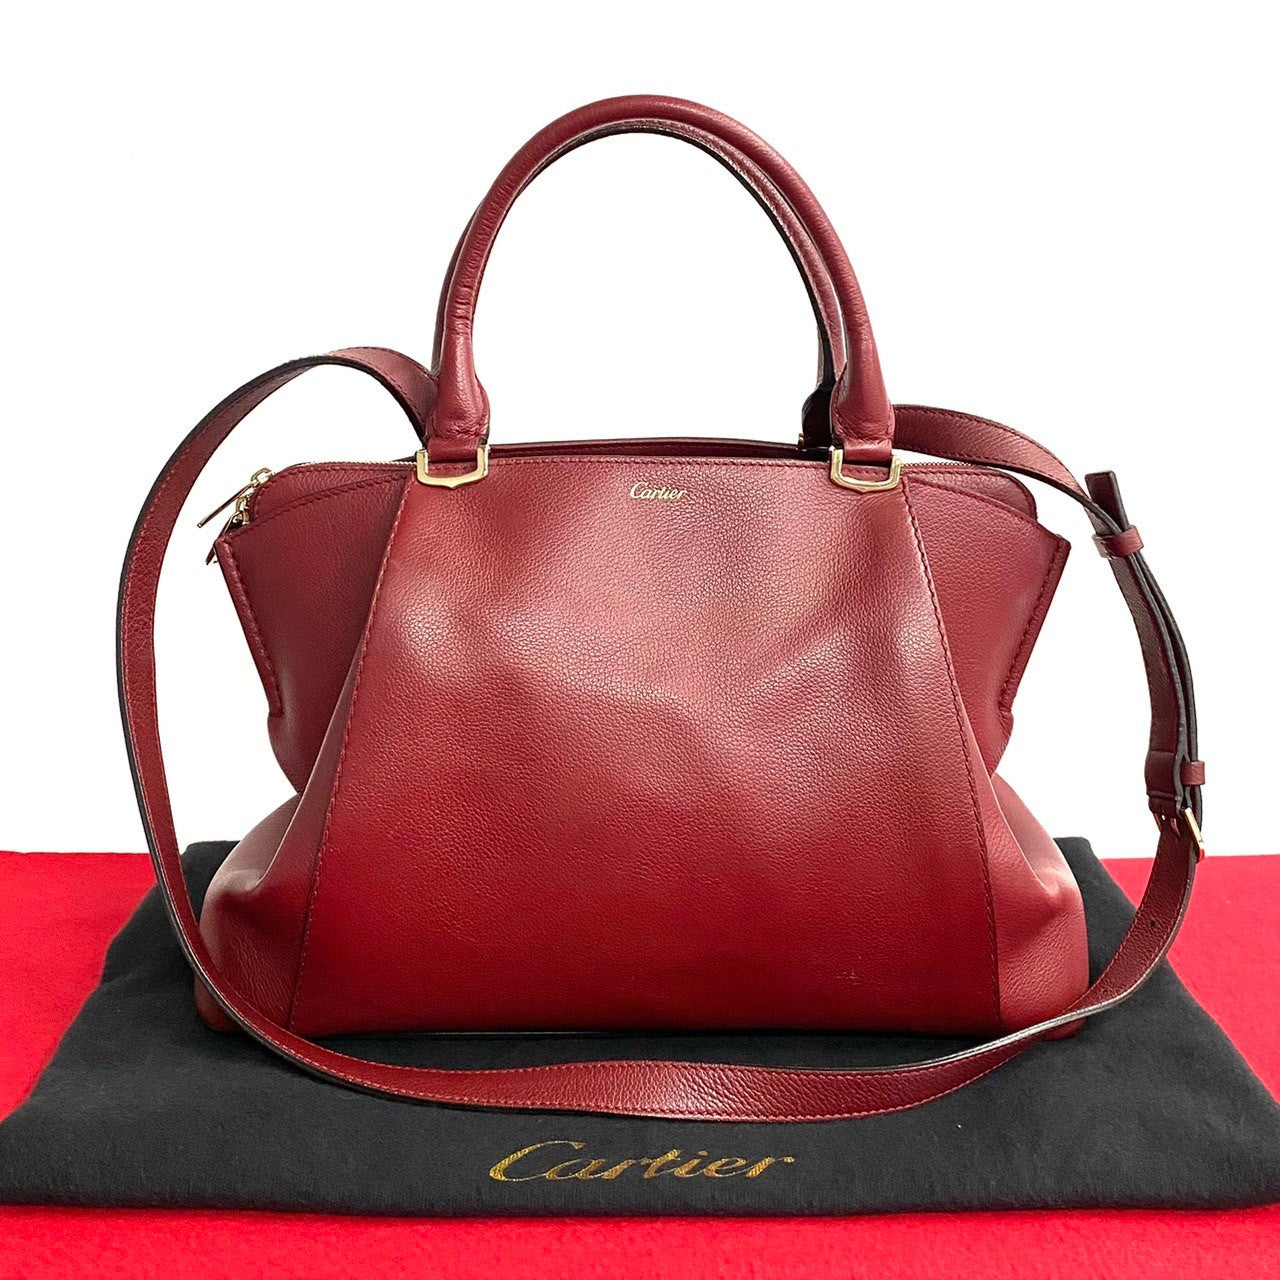 Cartier C de Cartier Leather Satchel Leather Handbag in Good condition